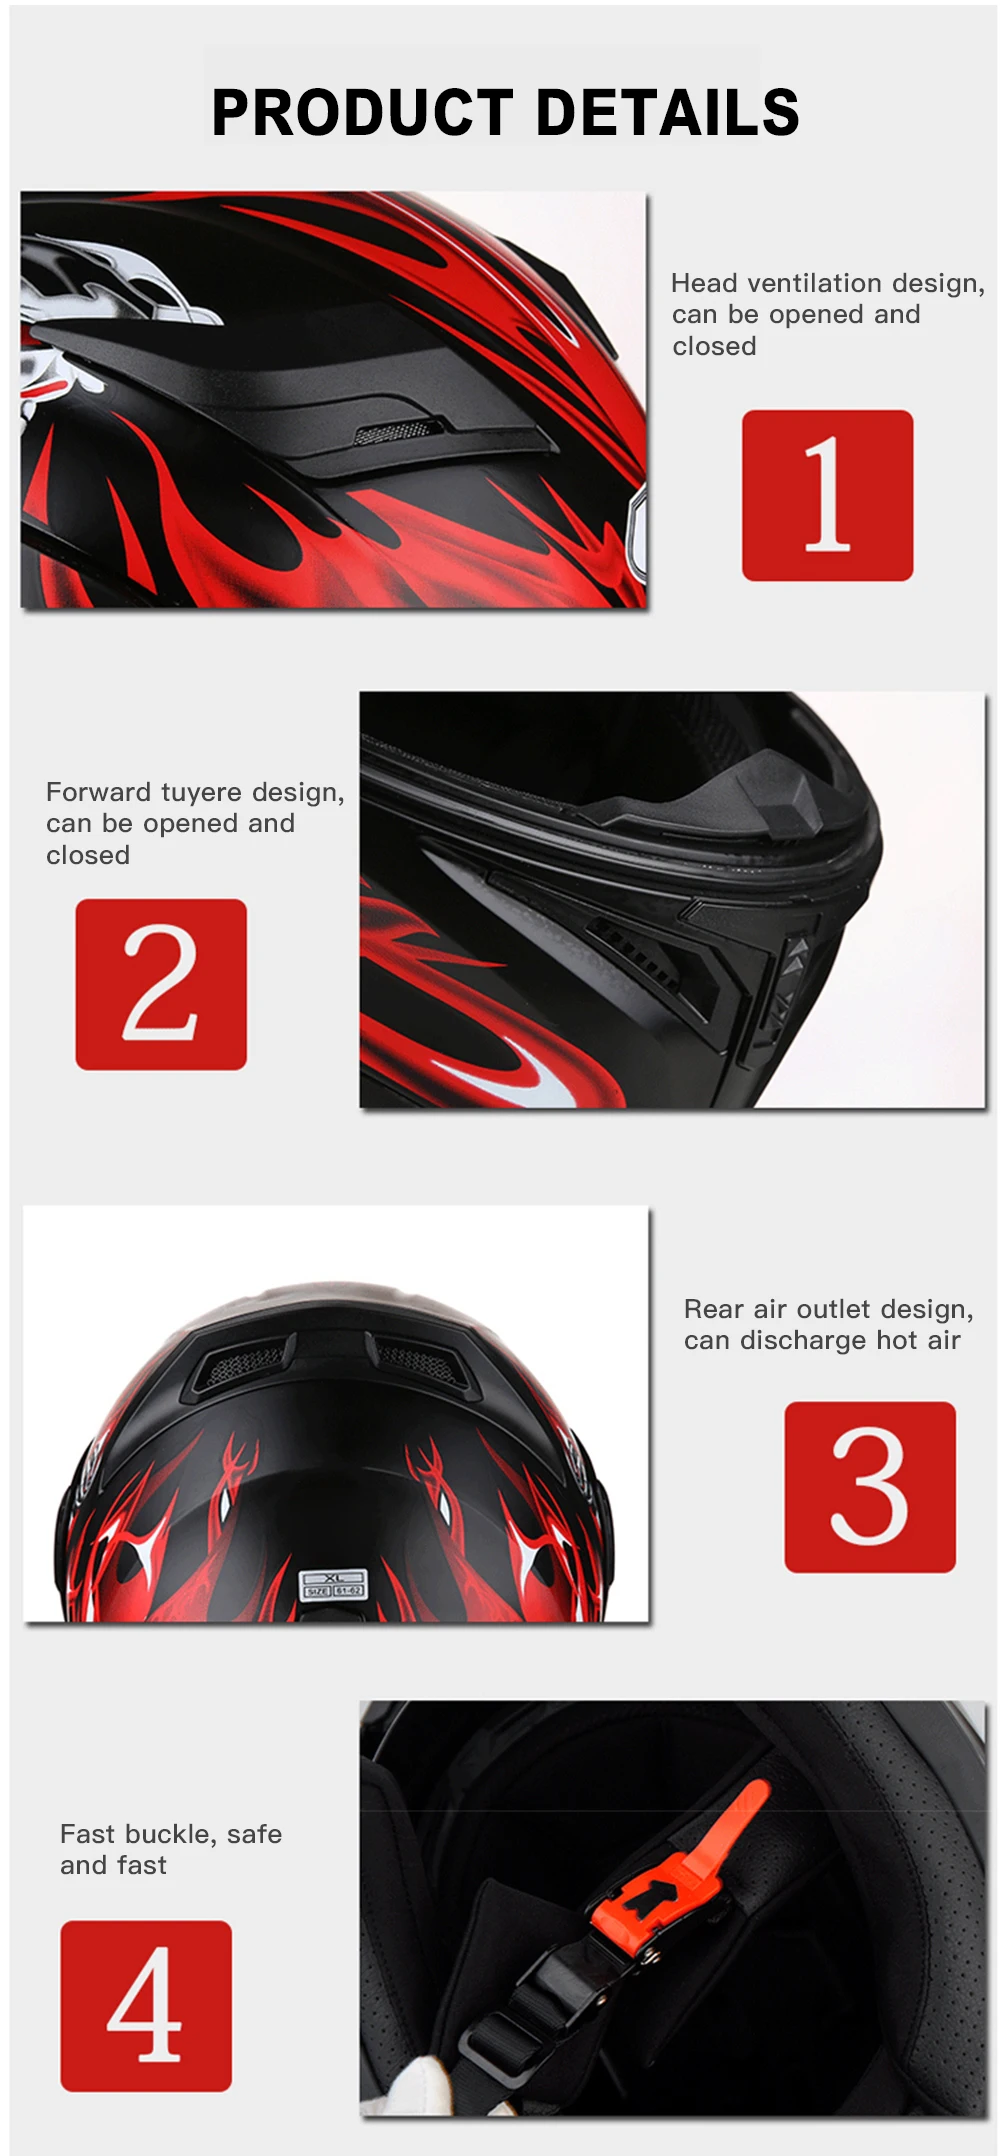 Motorcycle Helmet Full Covered Warm For Kawasaki Z800 Z1000 2007 